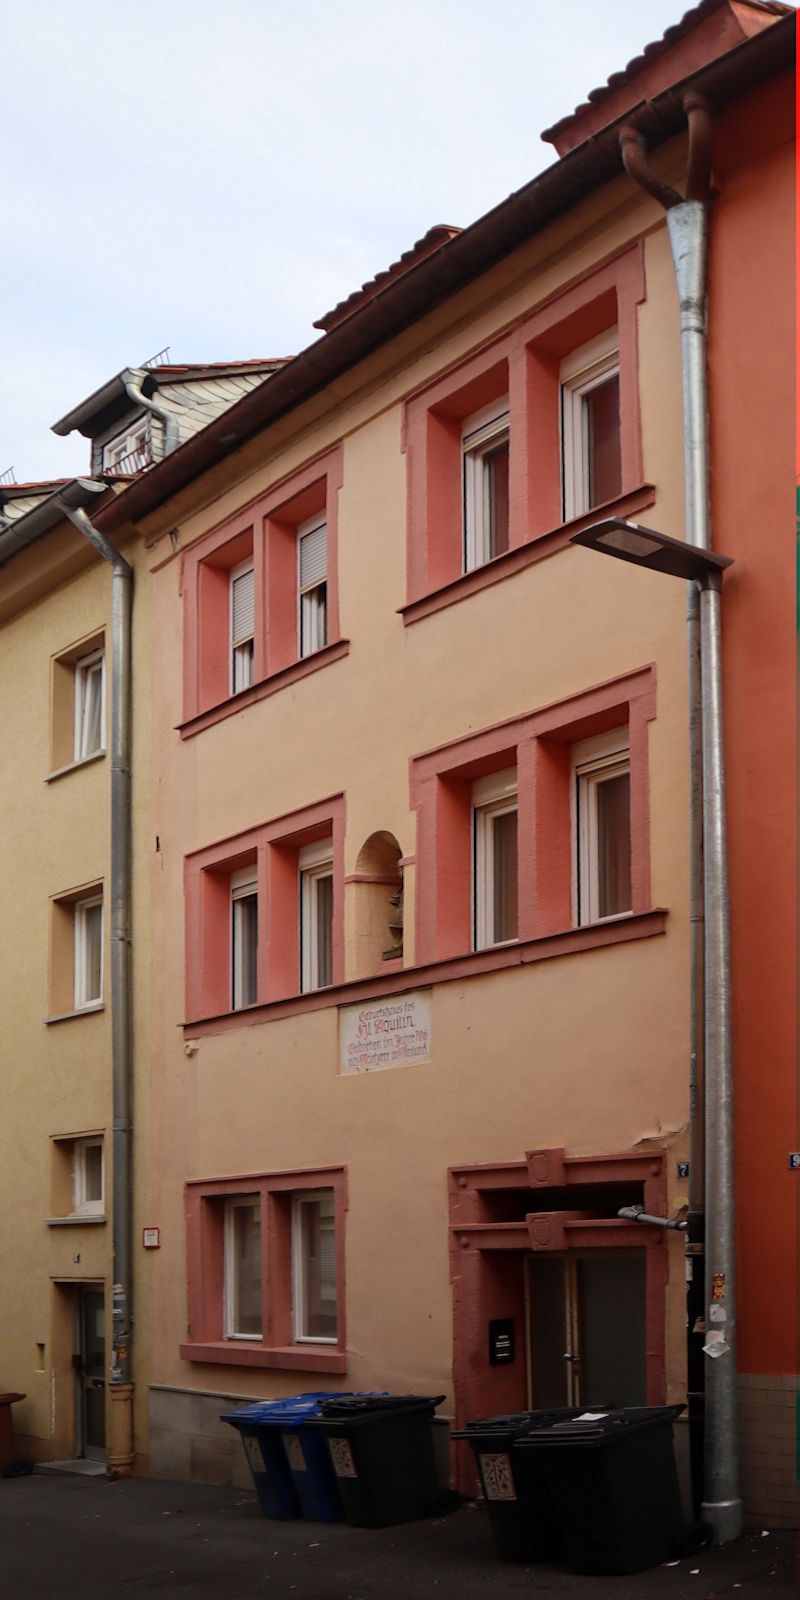 Aquilinus' Geburtshaus in Würzburg